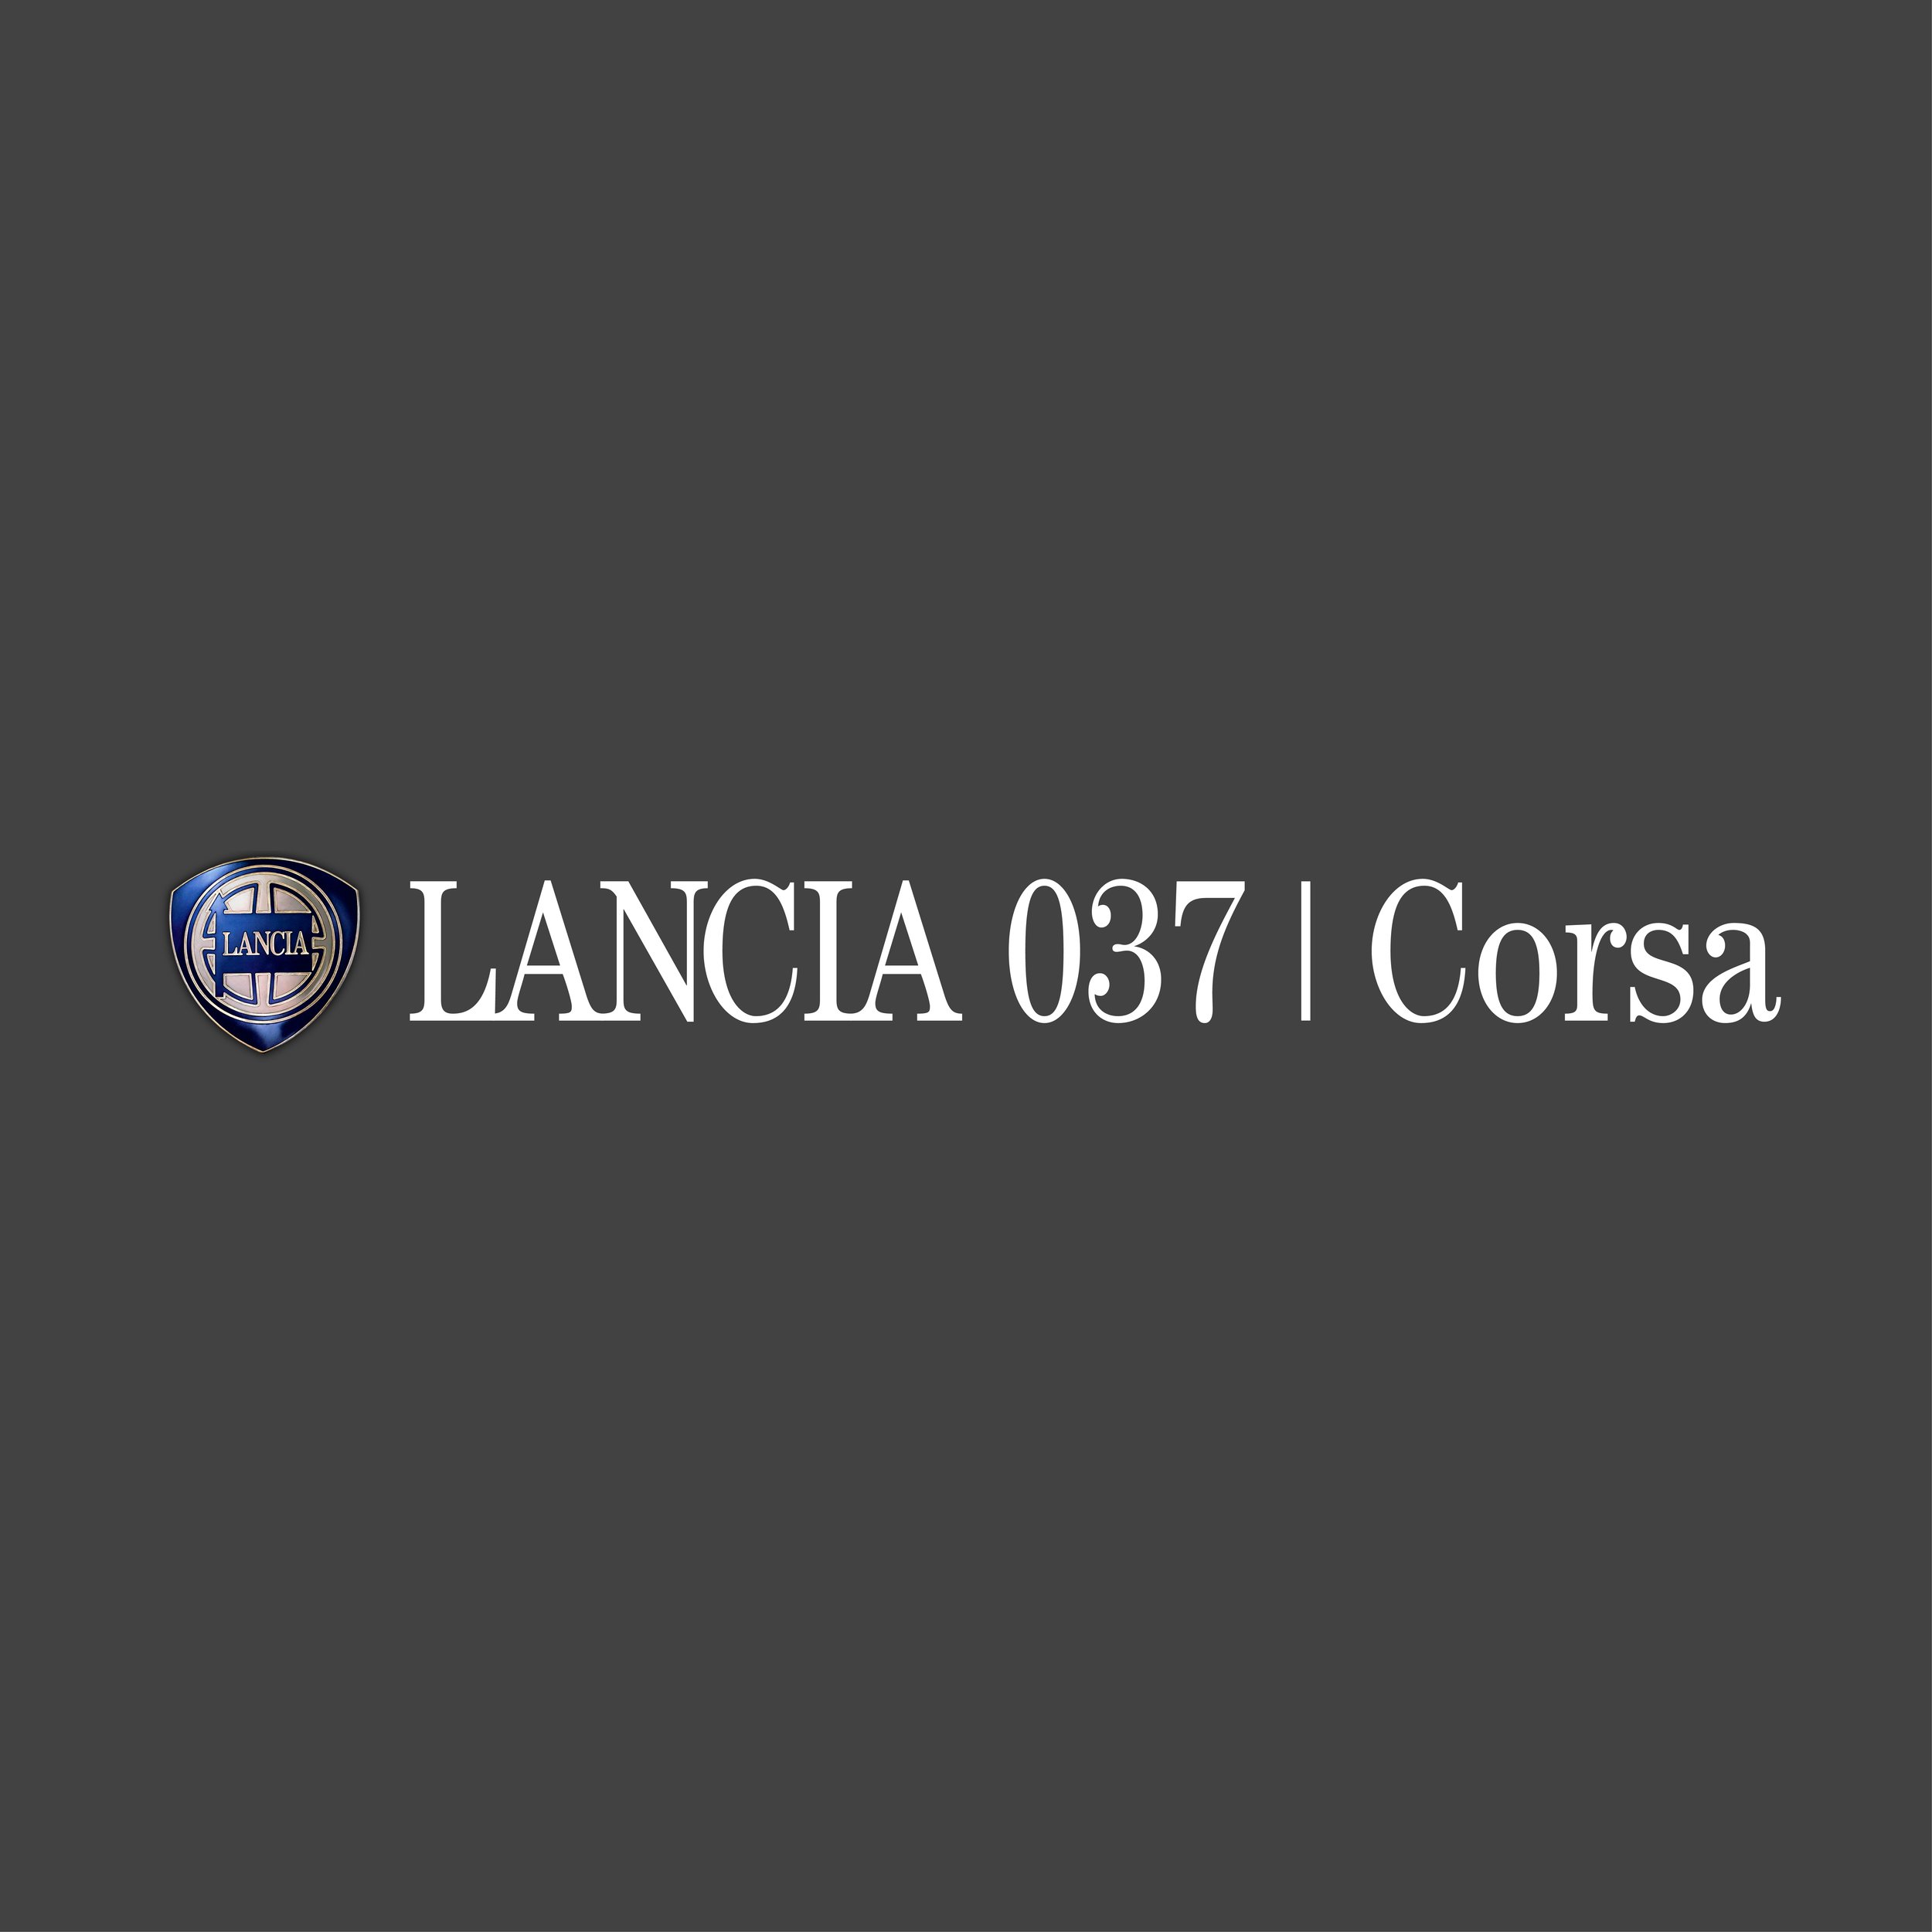 LANCIA 037 | Corsa Placeholder.jpg